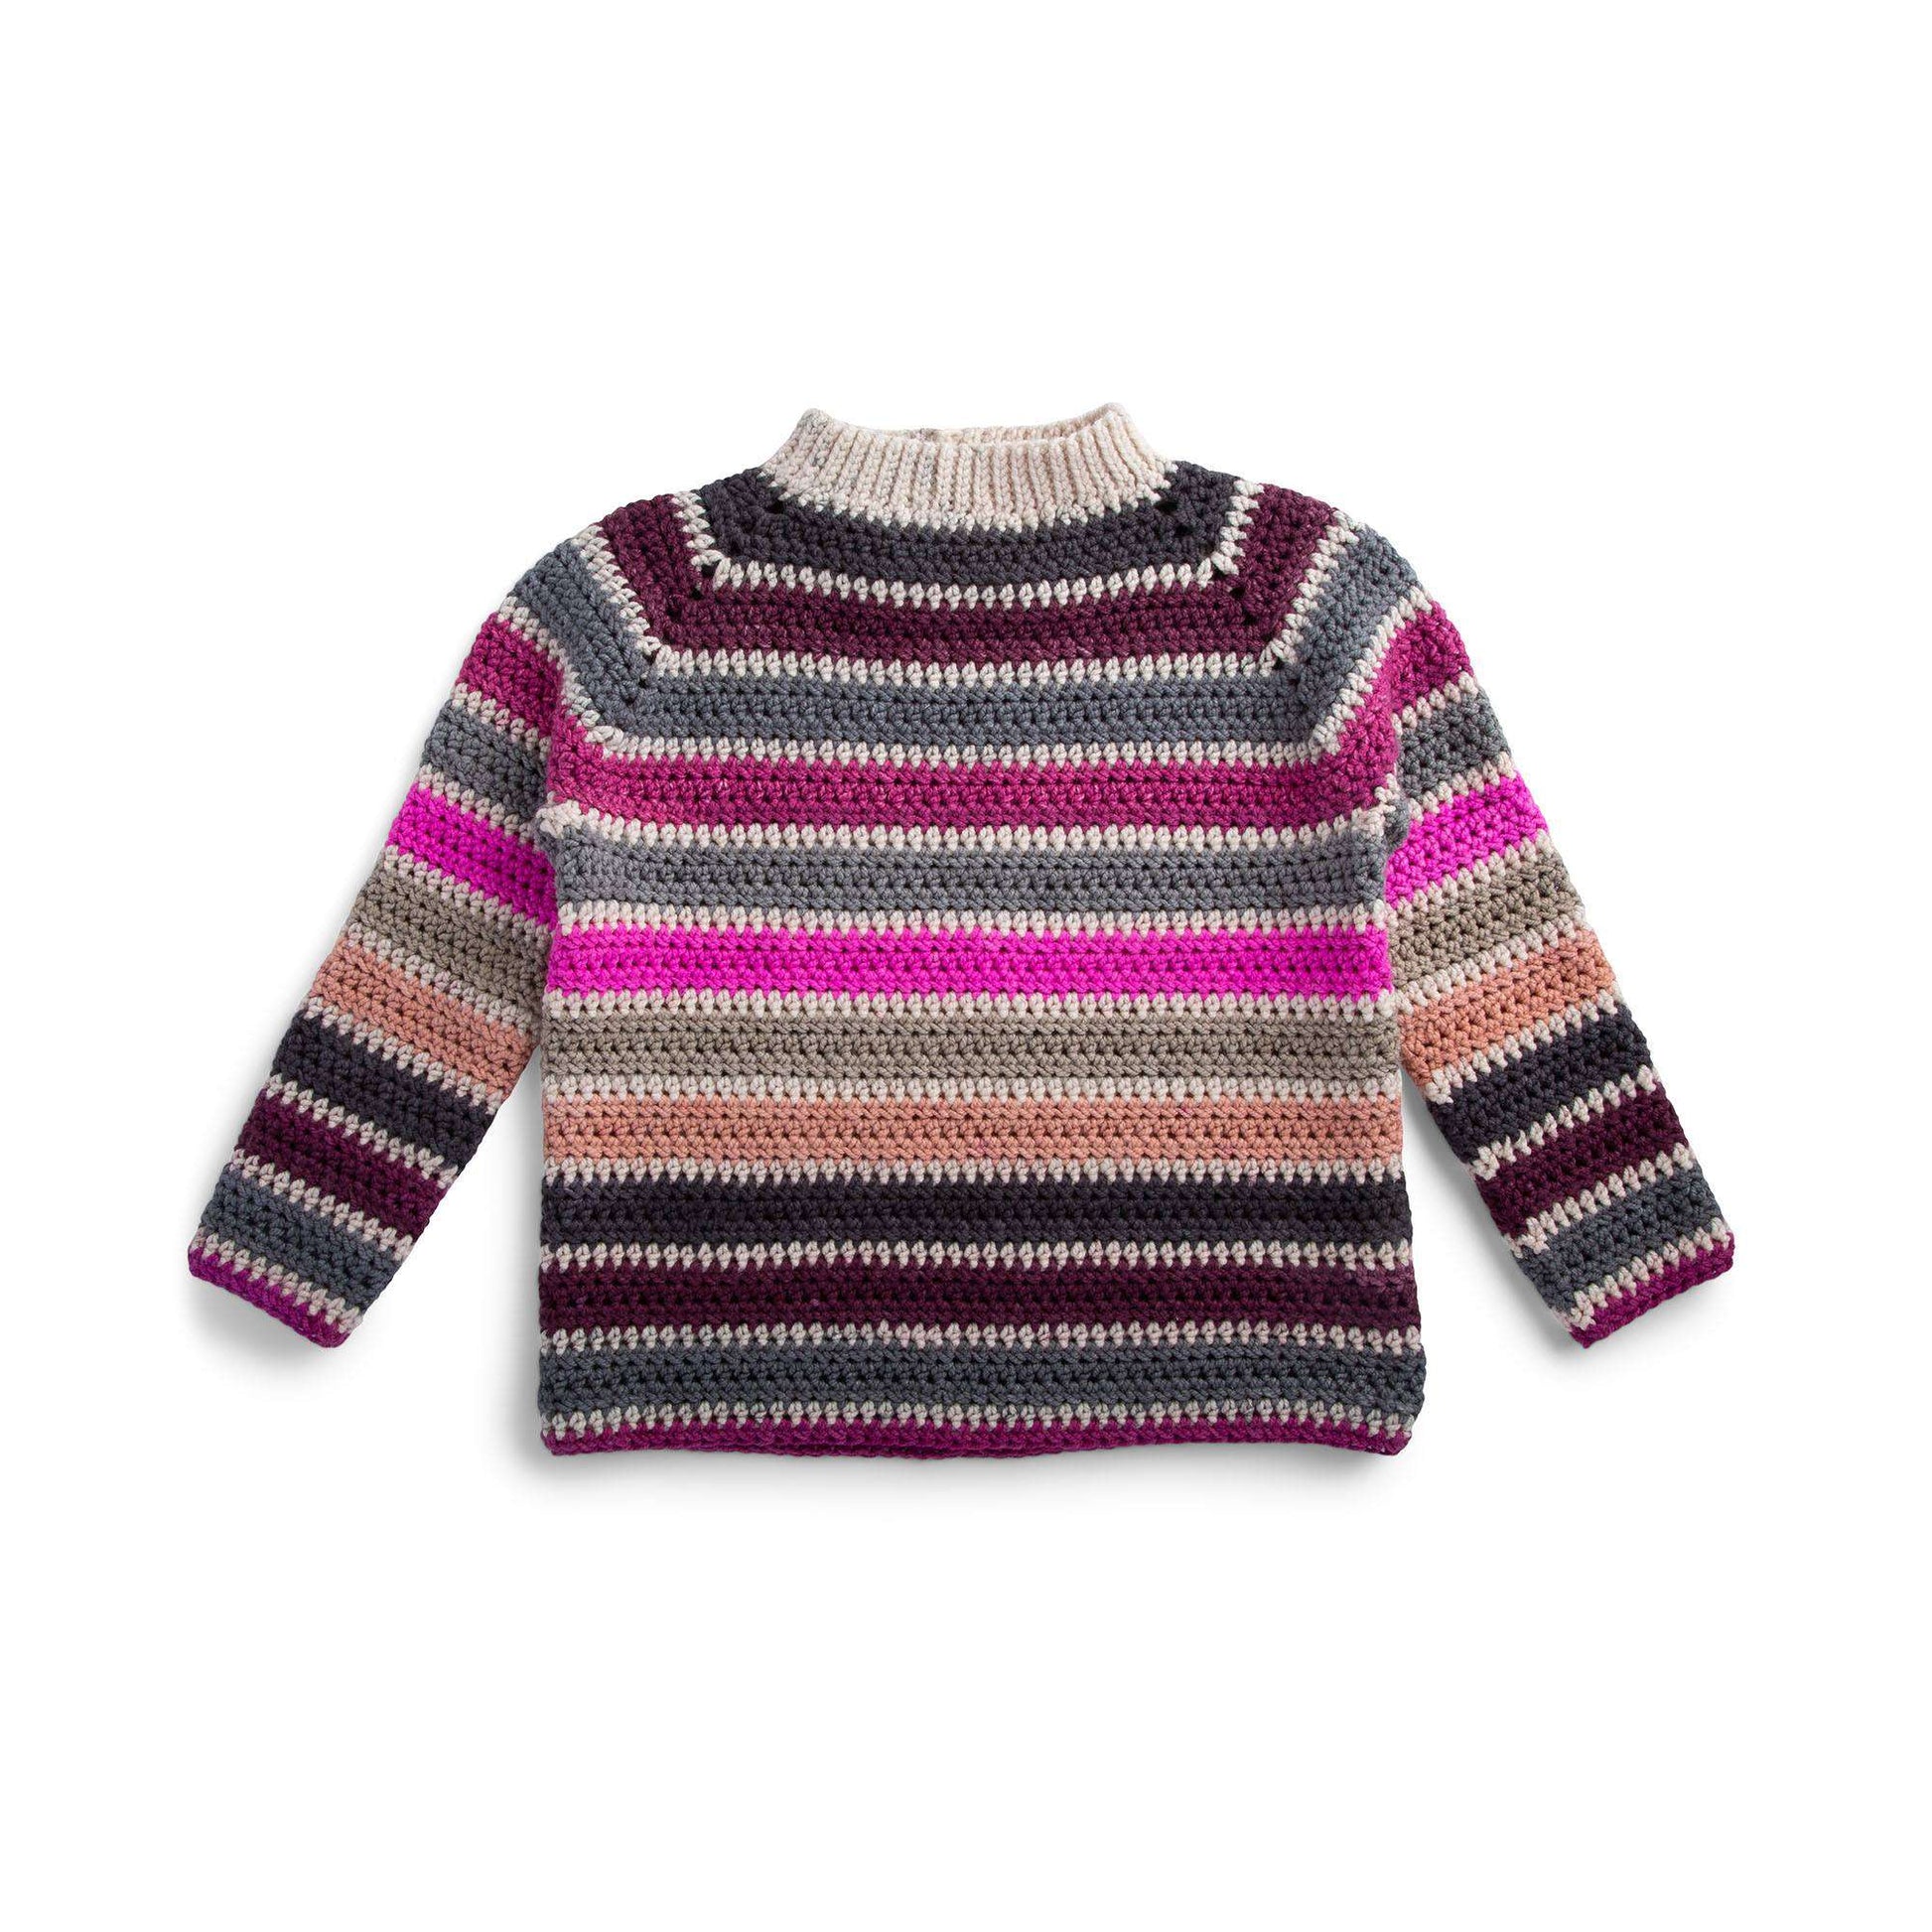 Raglan Crochet Tee Pattern - XS to 5XL - EASY